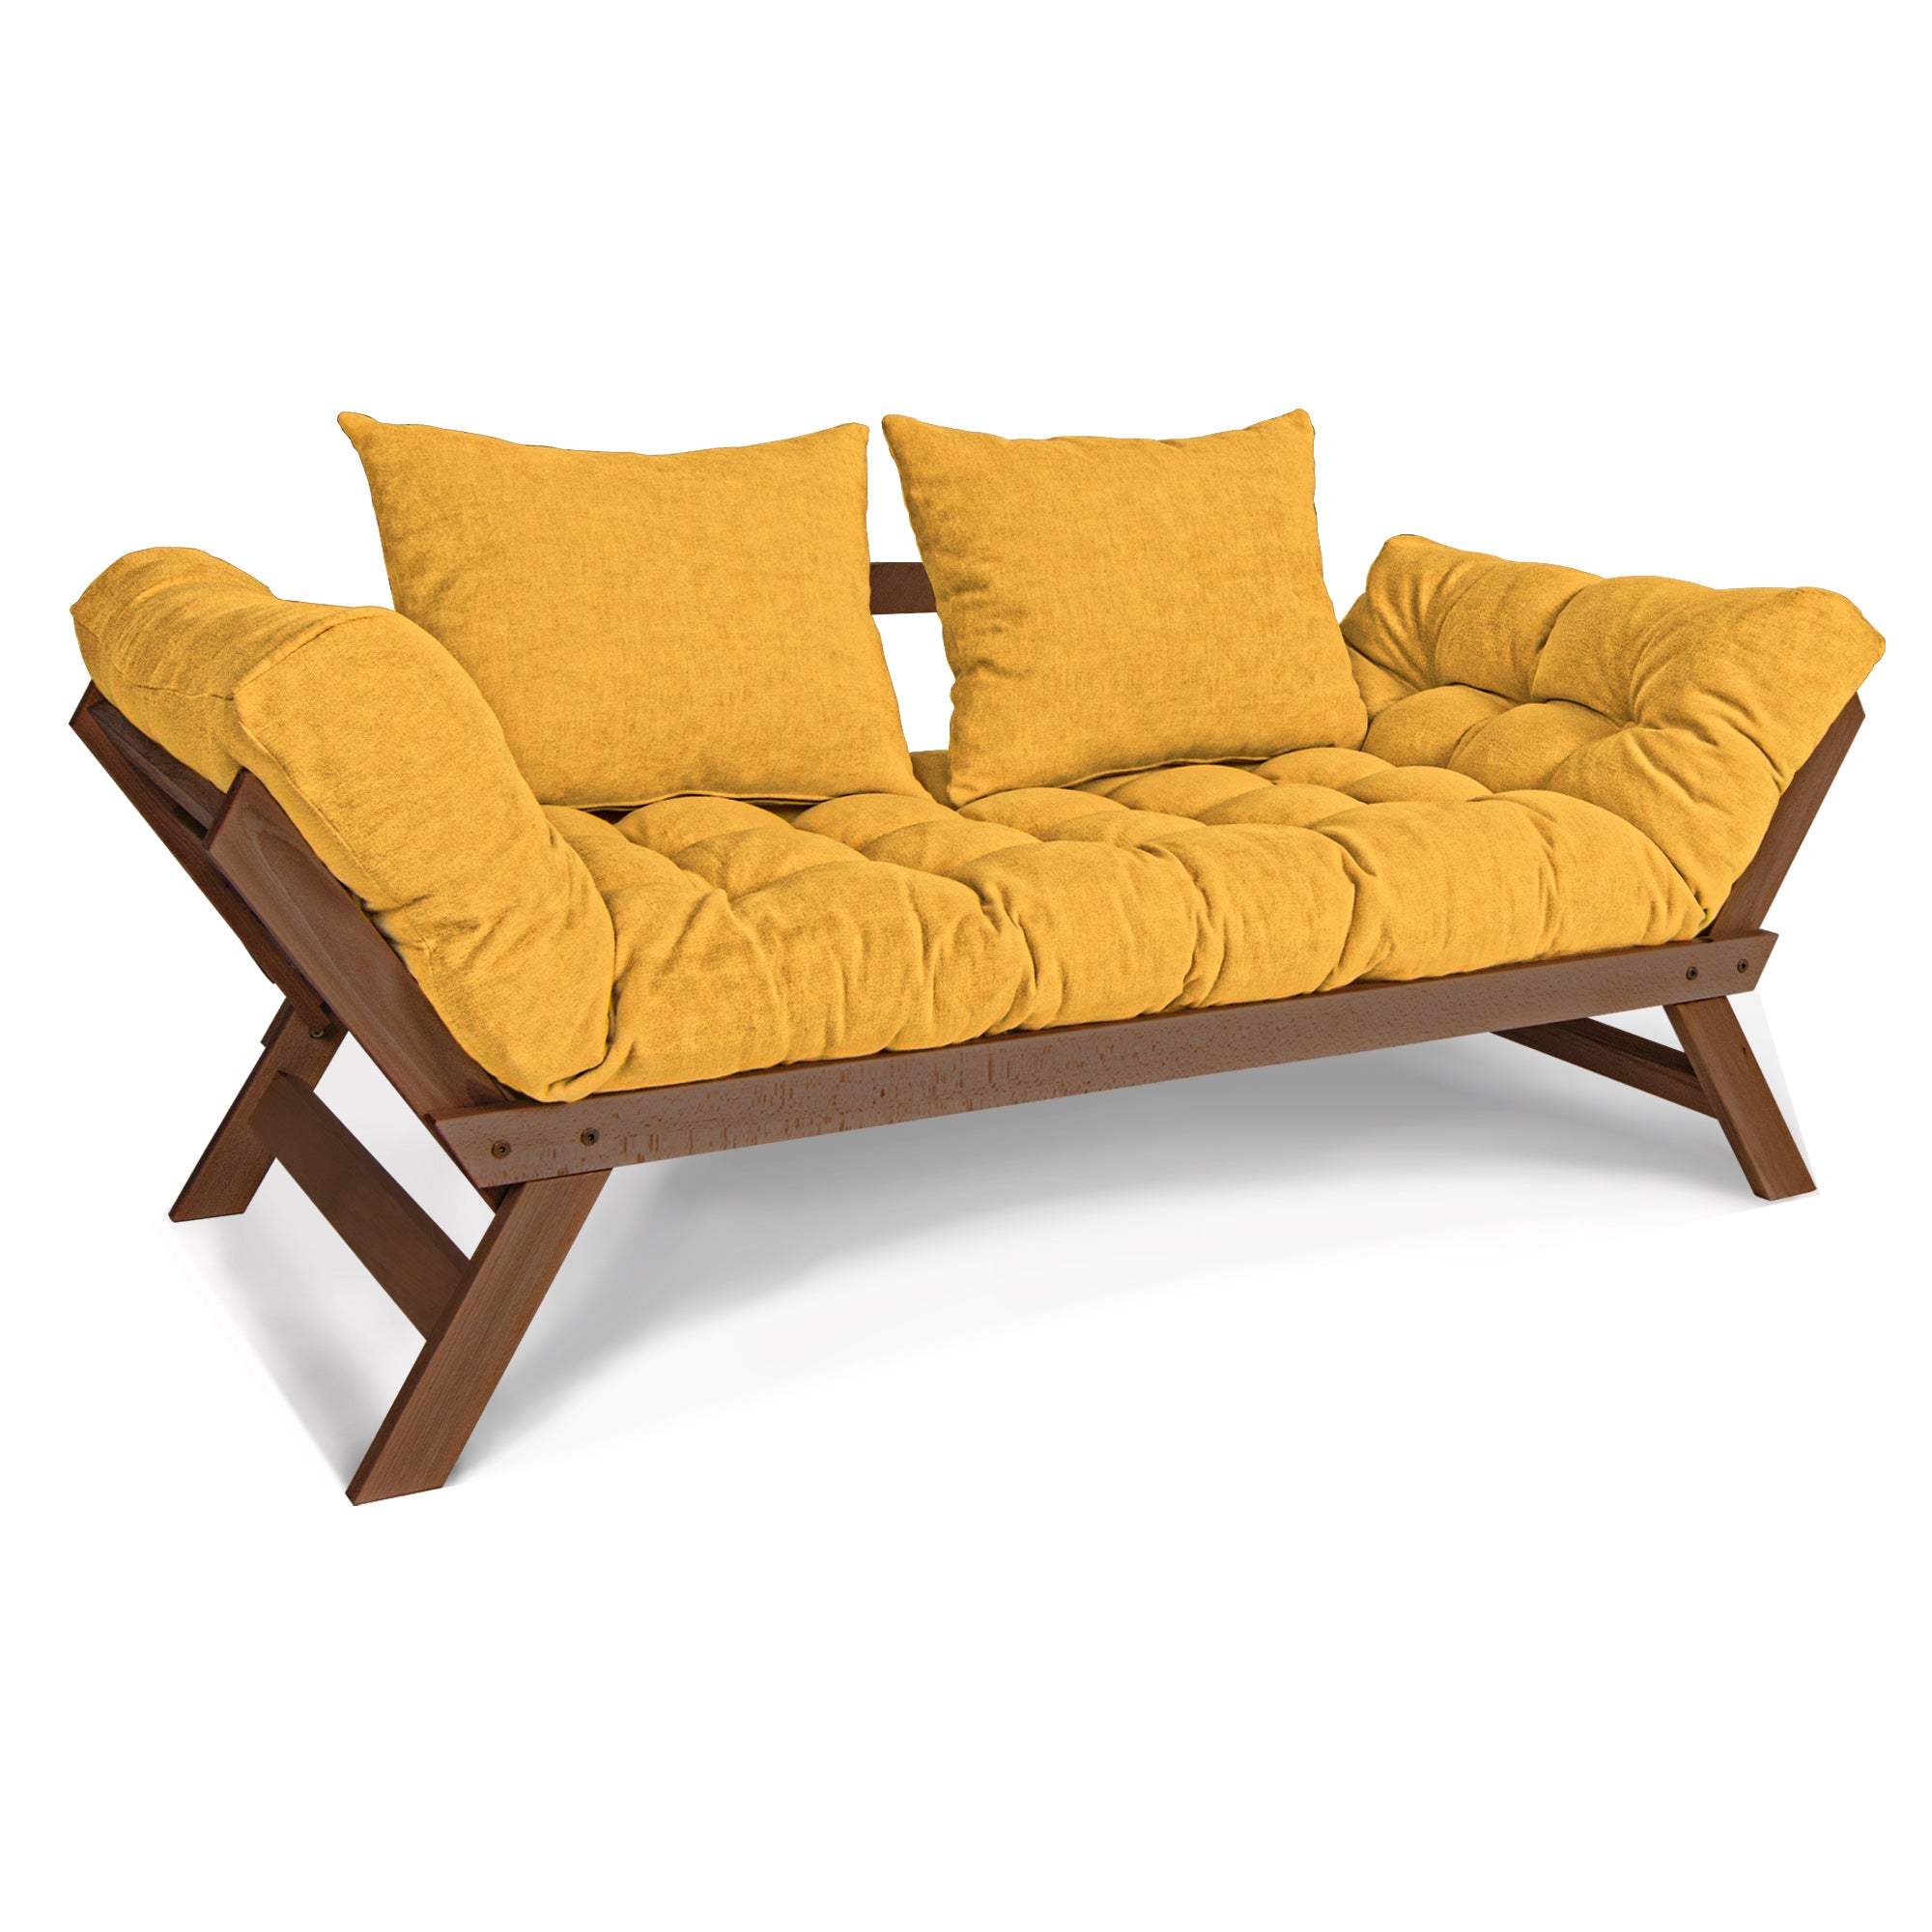 ALLEGRO Folding Sofa Bed, Beech Wood Frame, Walnut Colour upholstery yellow